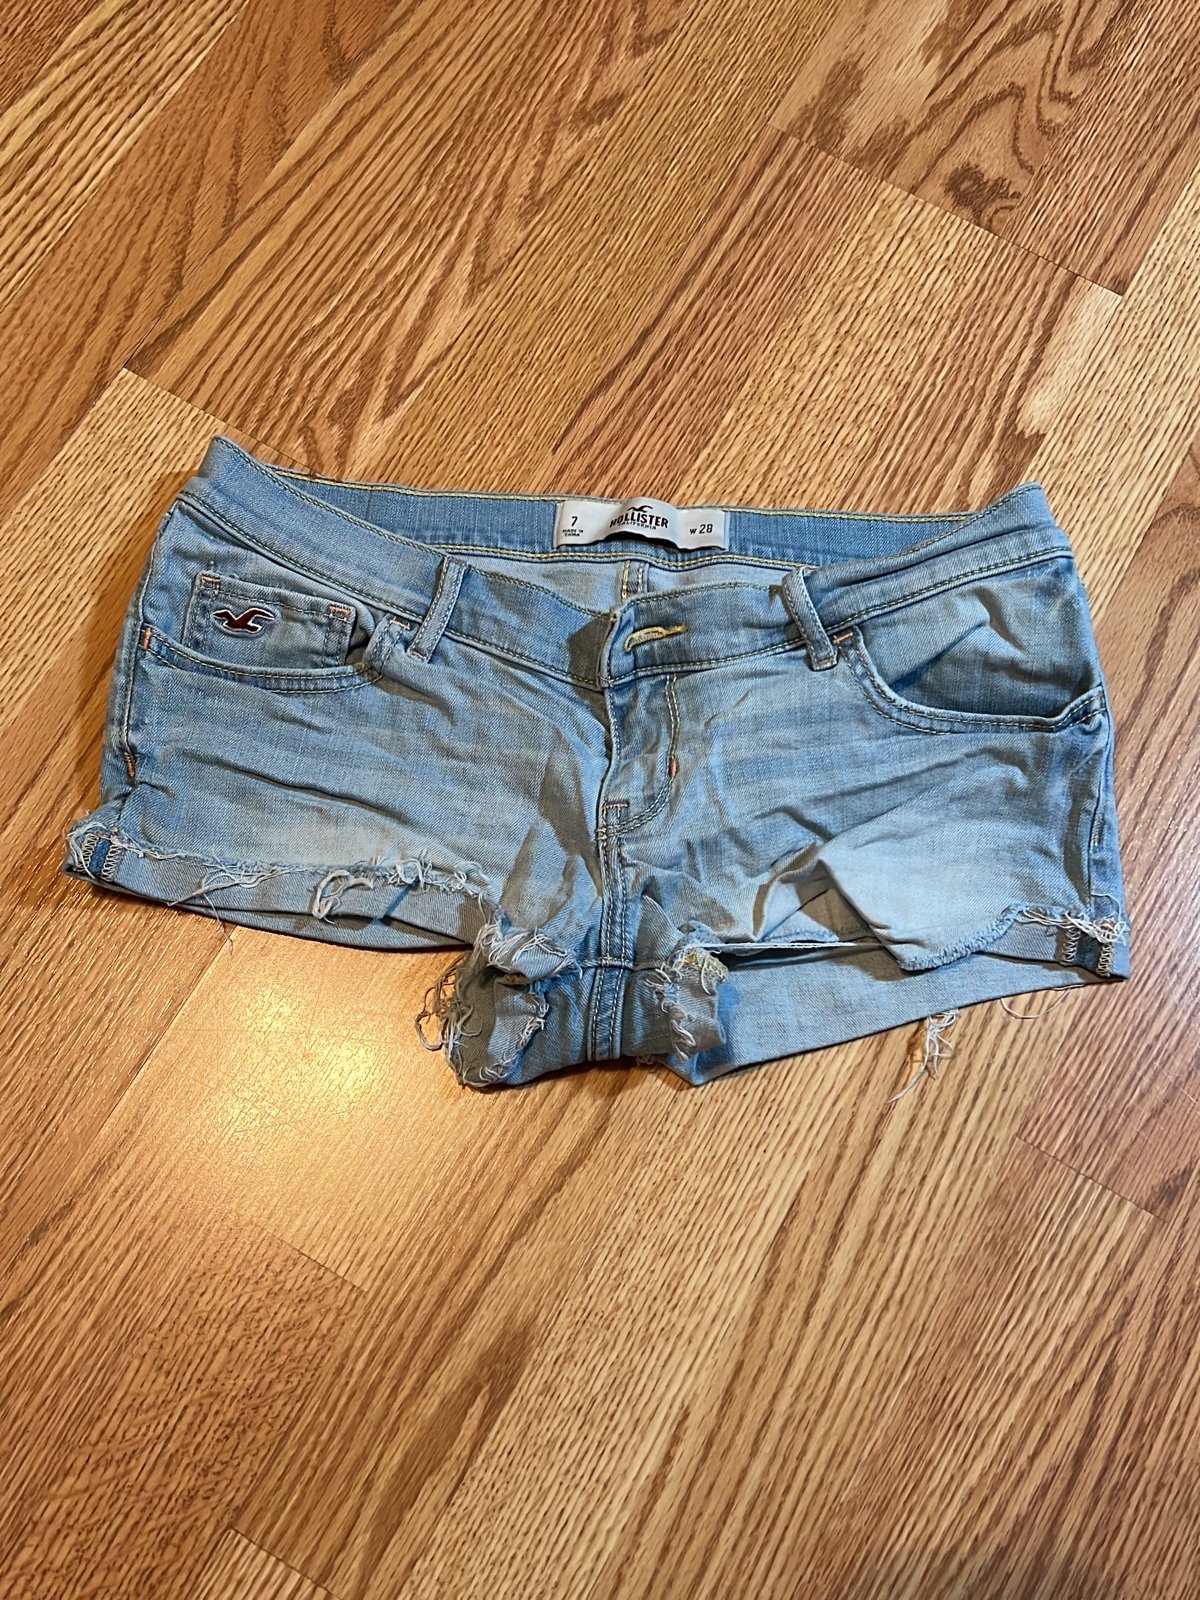 High quality Hollister jean shorts OhHB9TeHK Wholesale